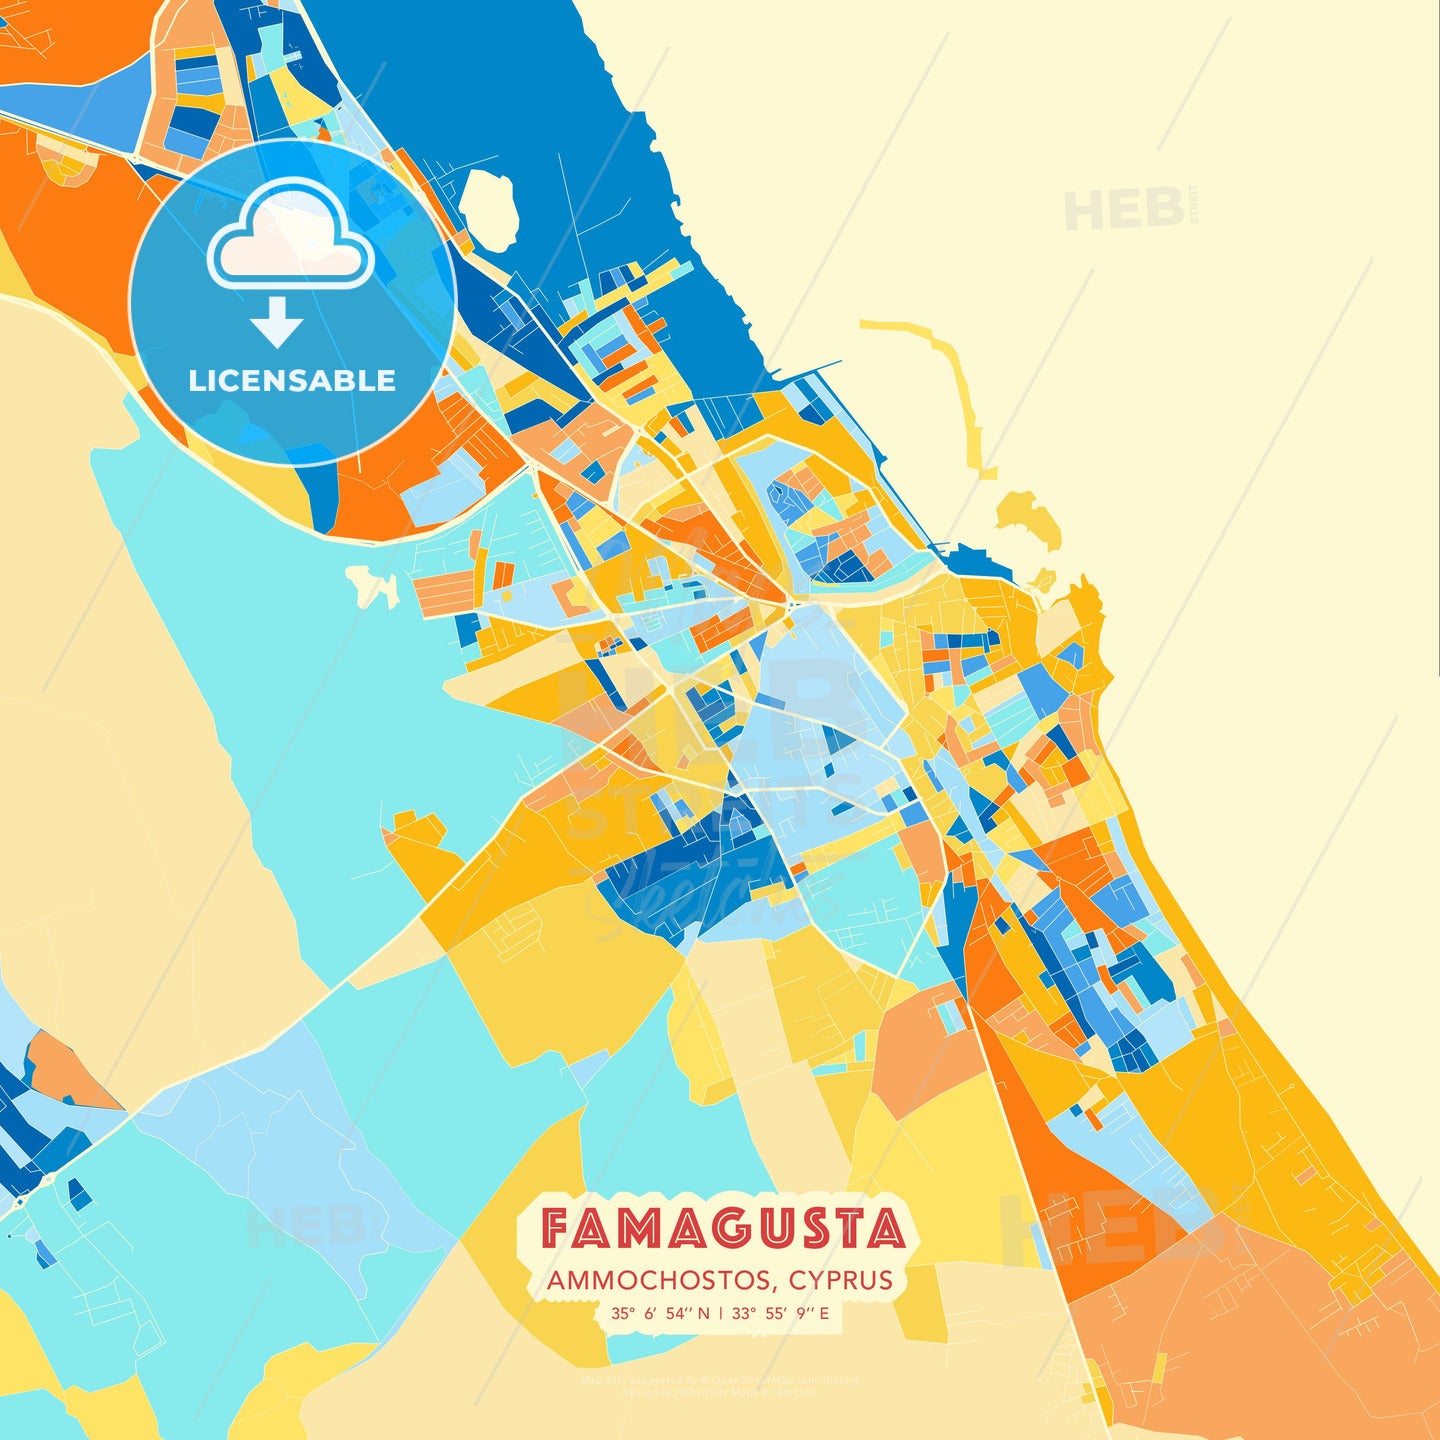 Famagusta  , Ammochostos, Cyprus, map - HEBSTREITS Sketches